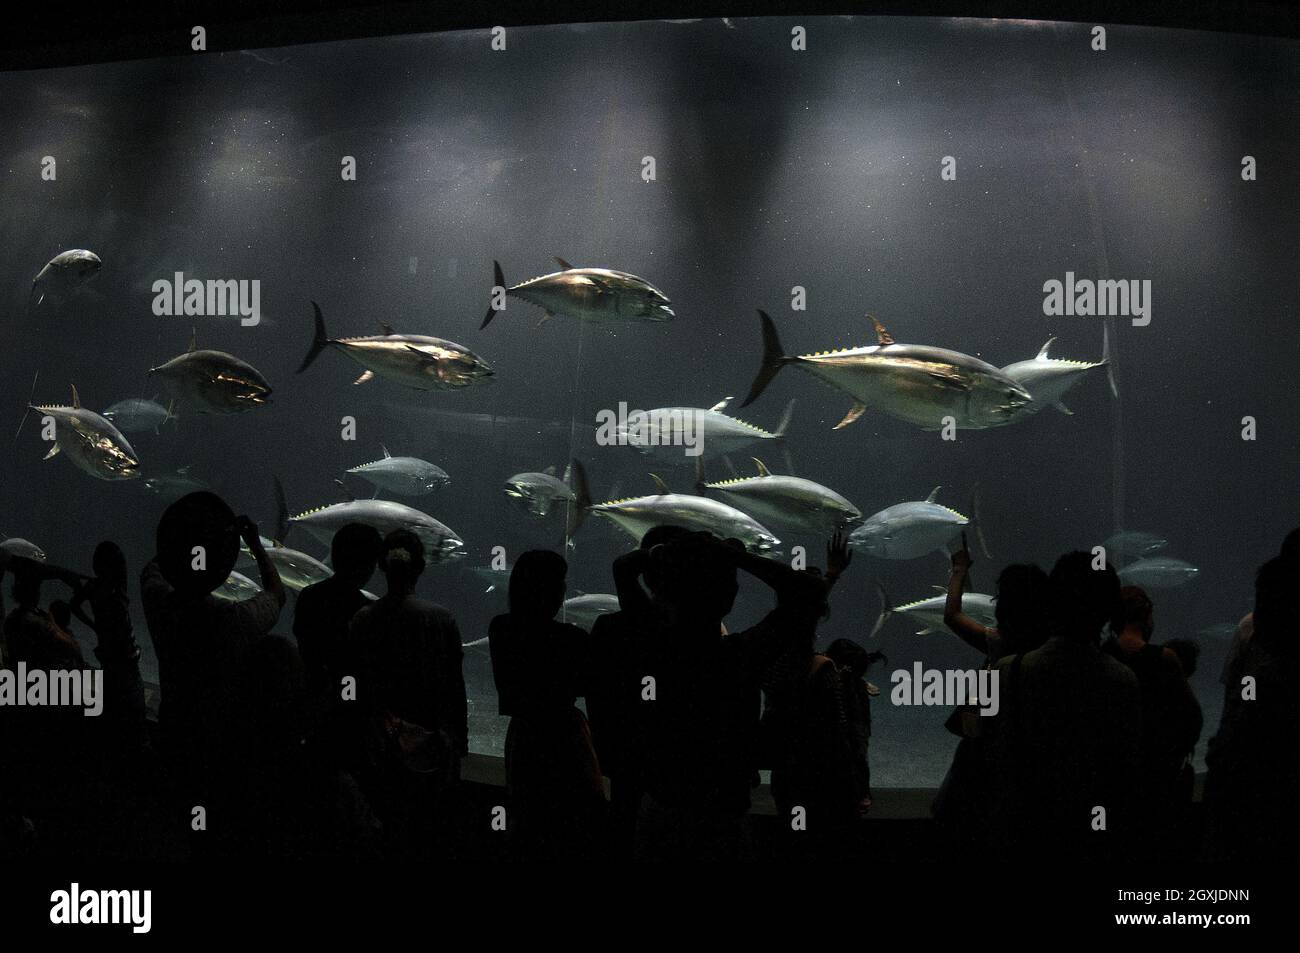 Yellowfin and bluefin tuna, Thunnus albacares and Thunnus orientalis, swimming in an Aquarium, Tokyo, Japan Stock Photo